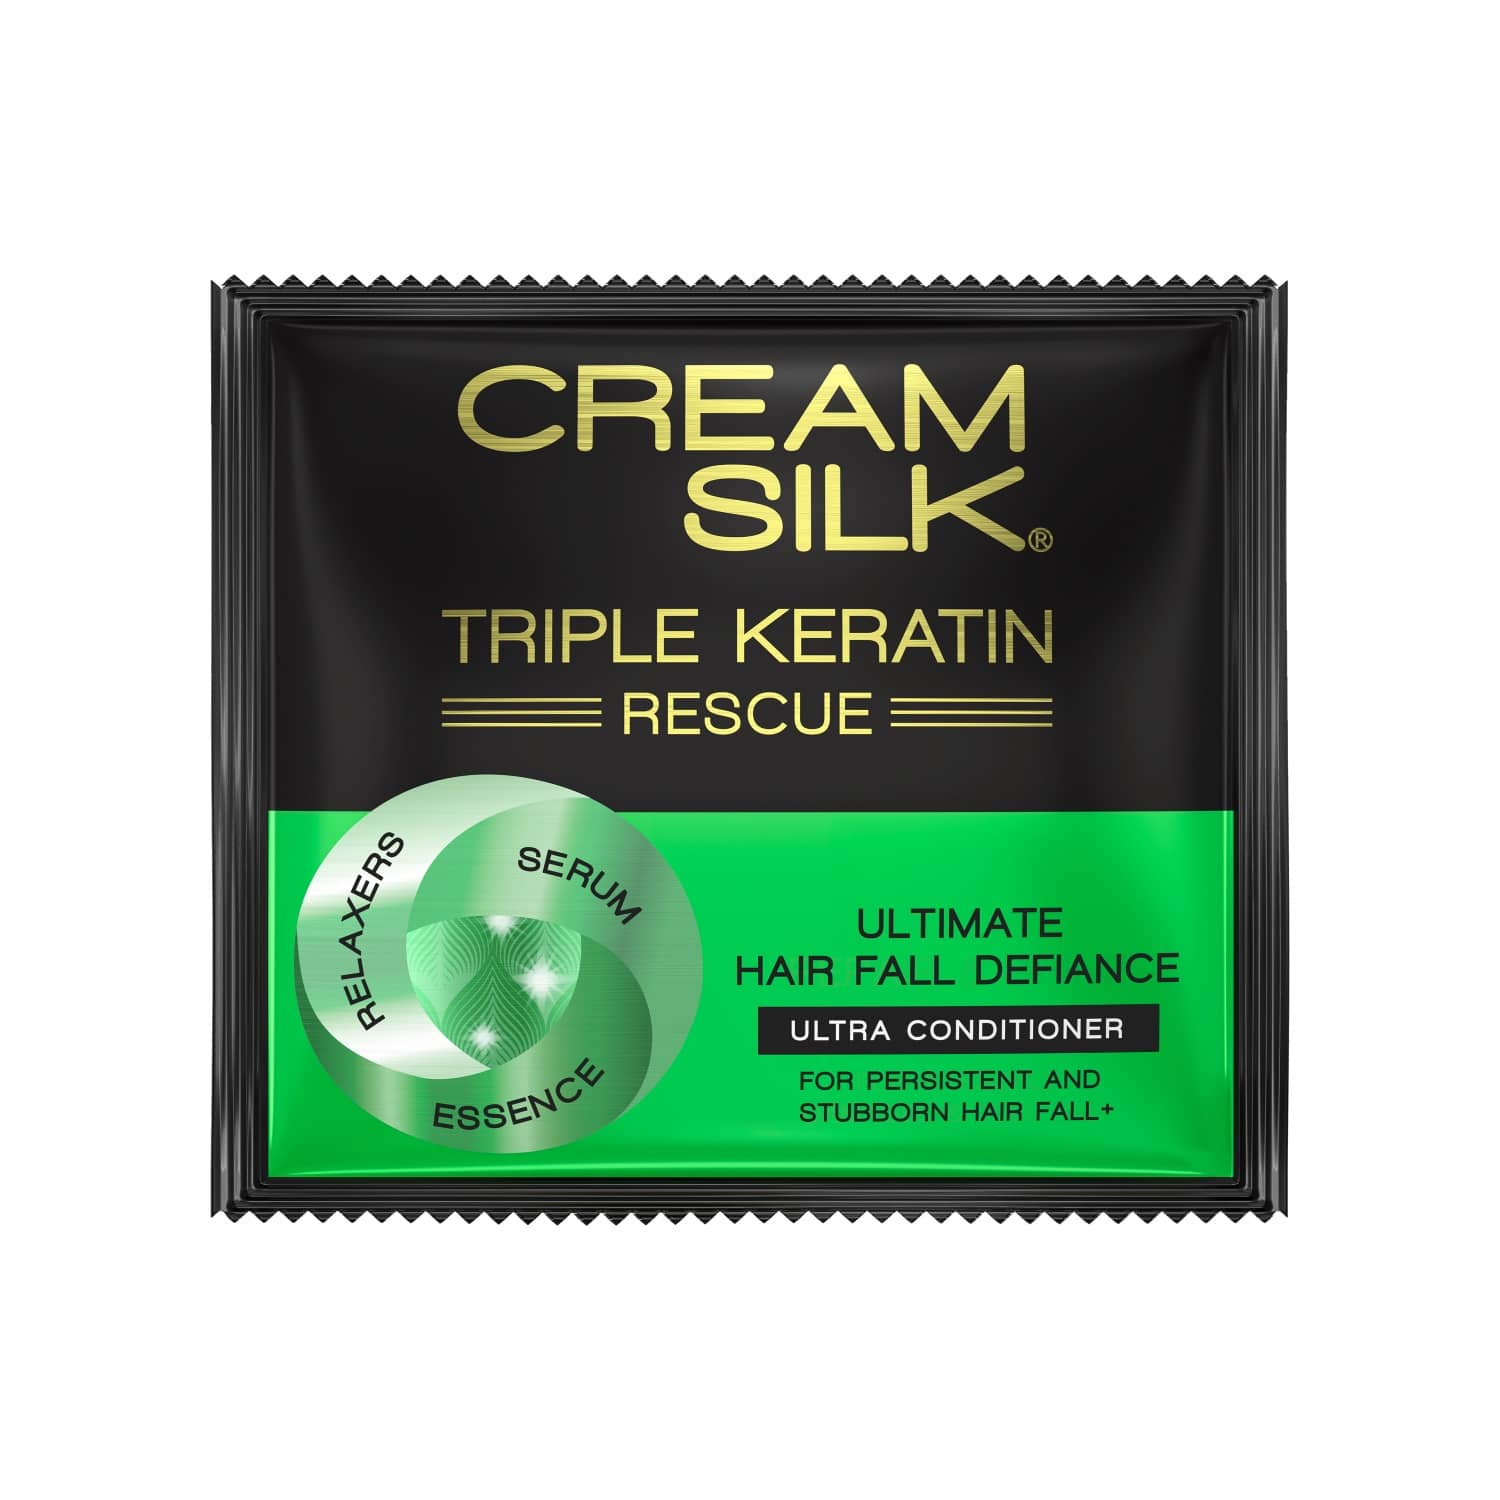 Cream Silk Triple Keratin Rescue Hair Fall Defiance Ultra Conditioner 10ML